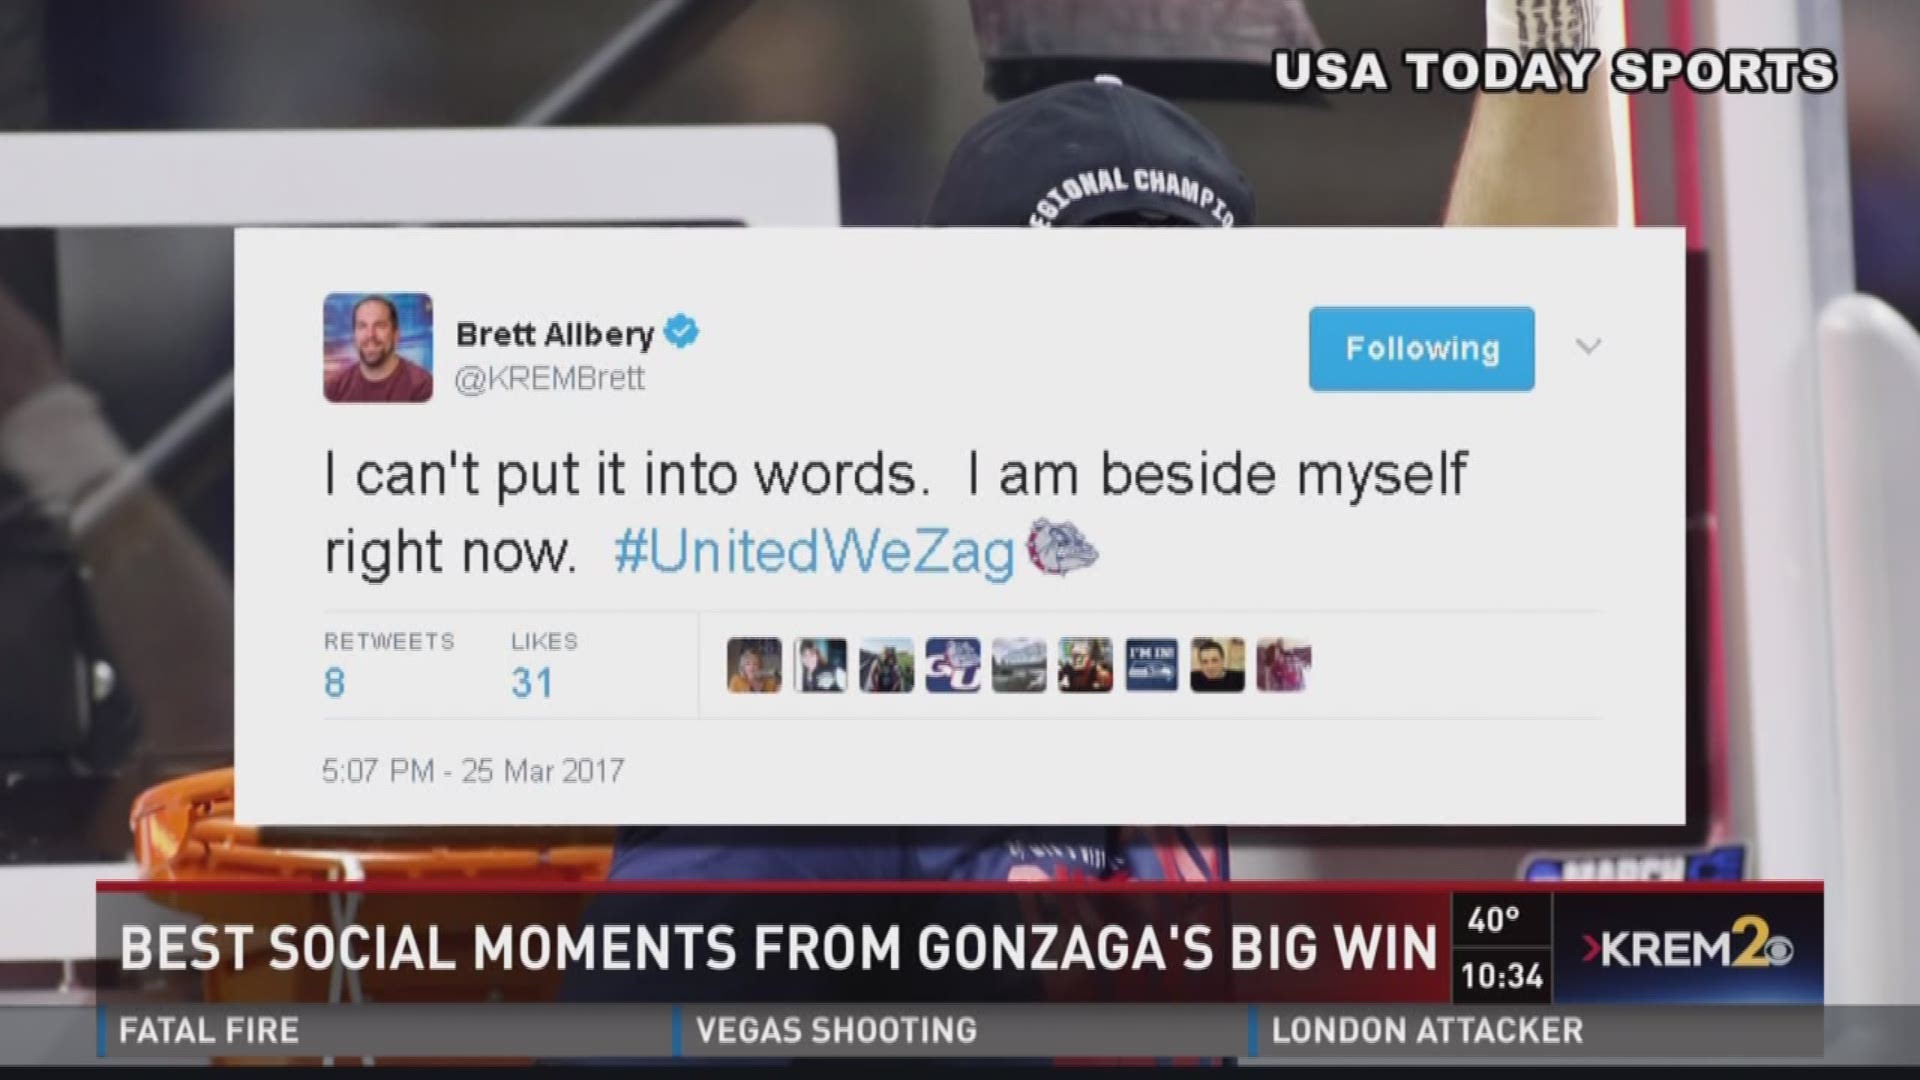 Best social media posts following Gonzaga's win